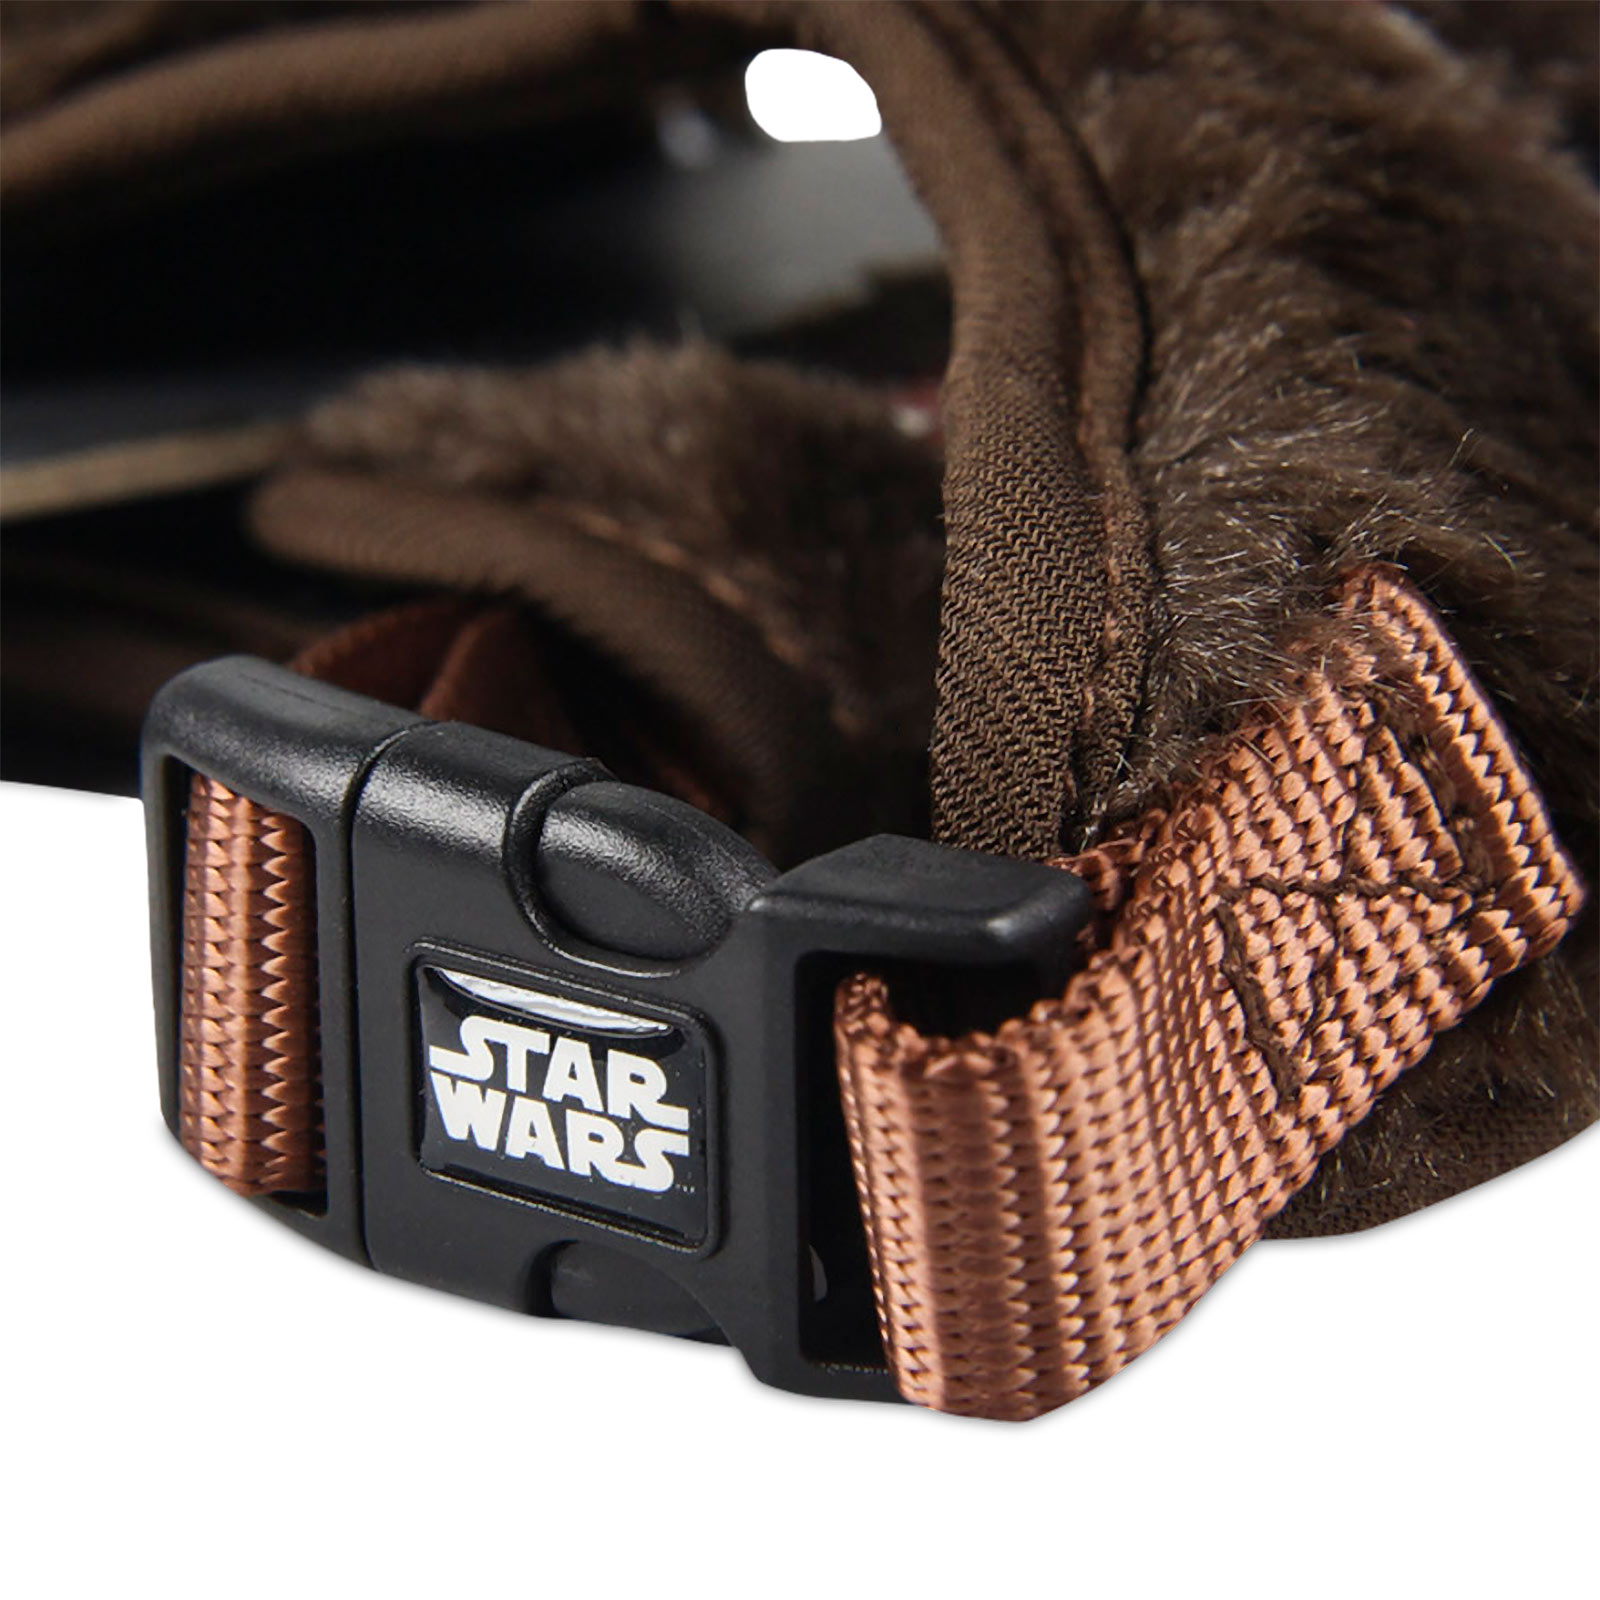 Star Wars - Chewbacca Dog Harness Brown